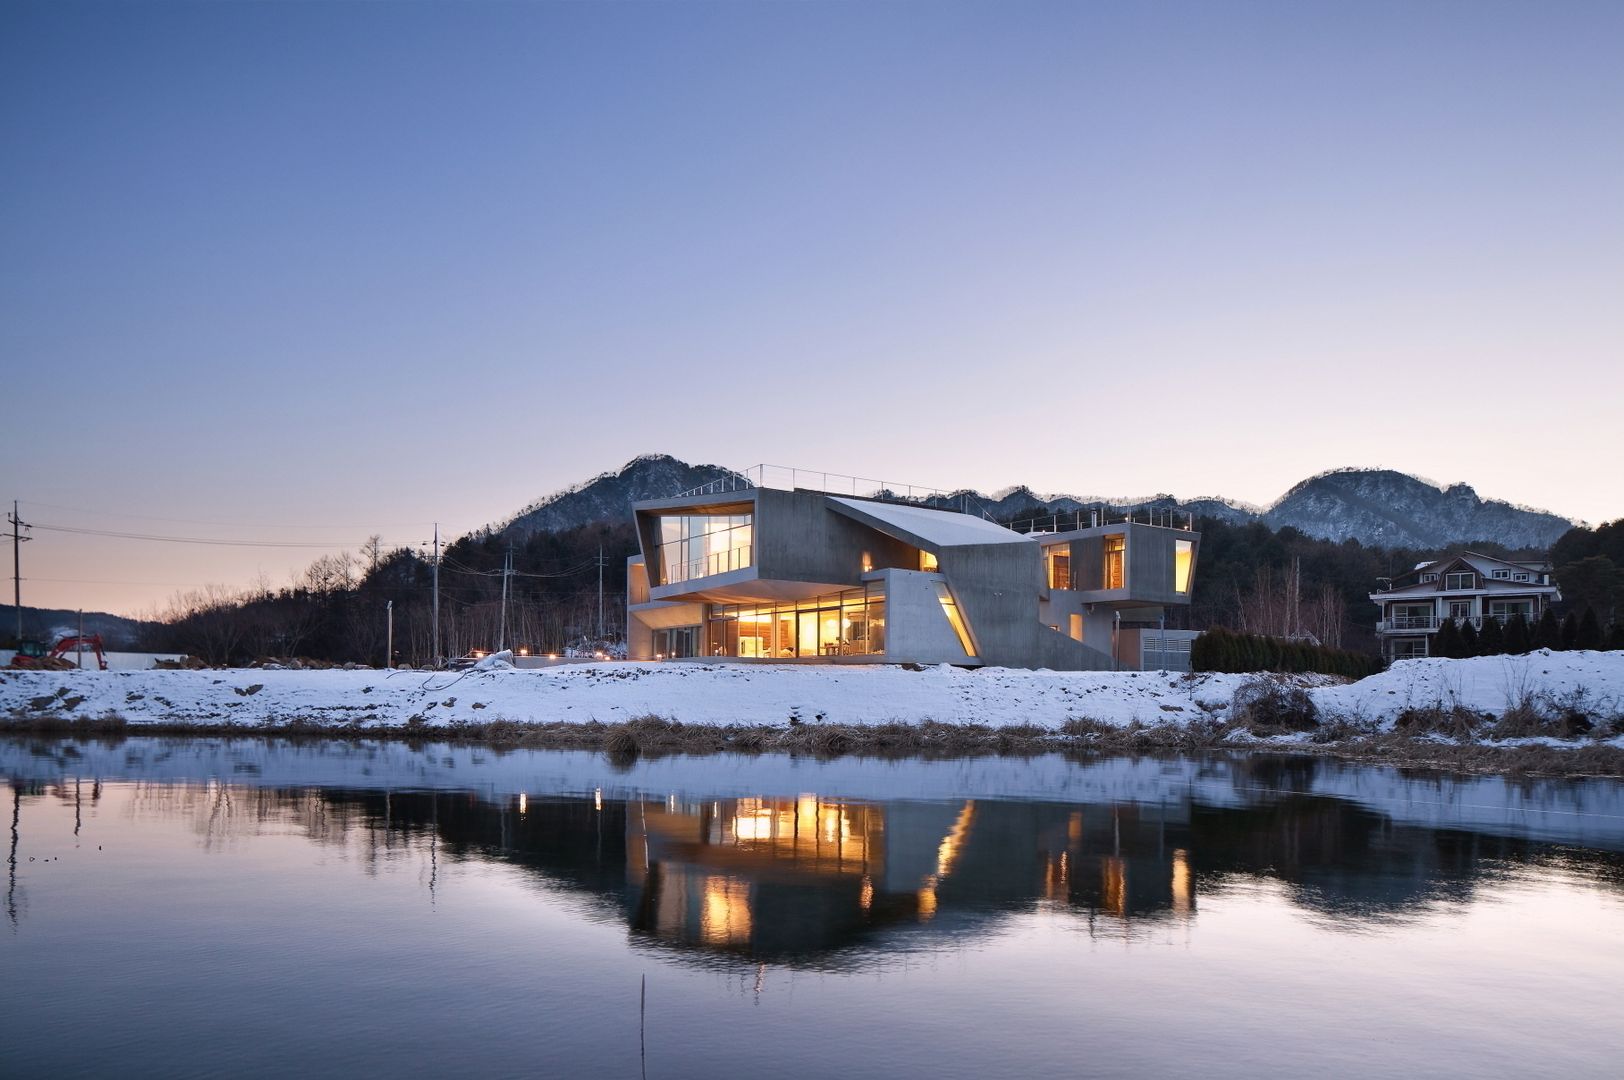 Guesthouse Rivendell, KWAK, HEESOO [IDMM Architects] KWAK, HEESOO [IDMM Architects] Moderne Häuser